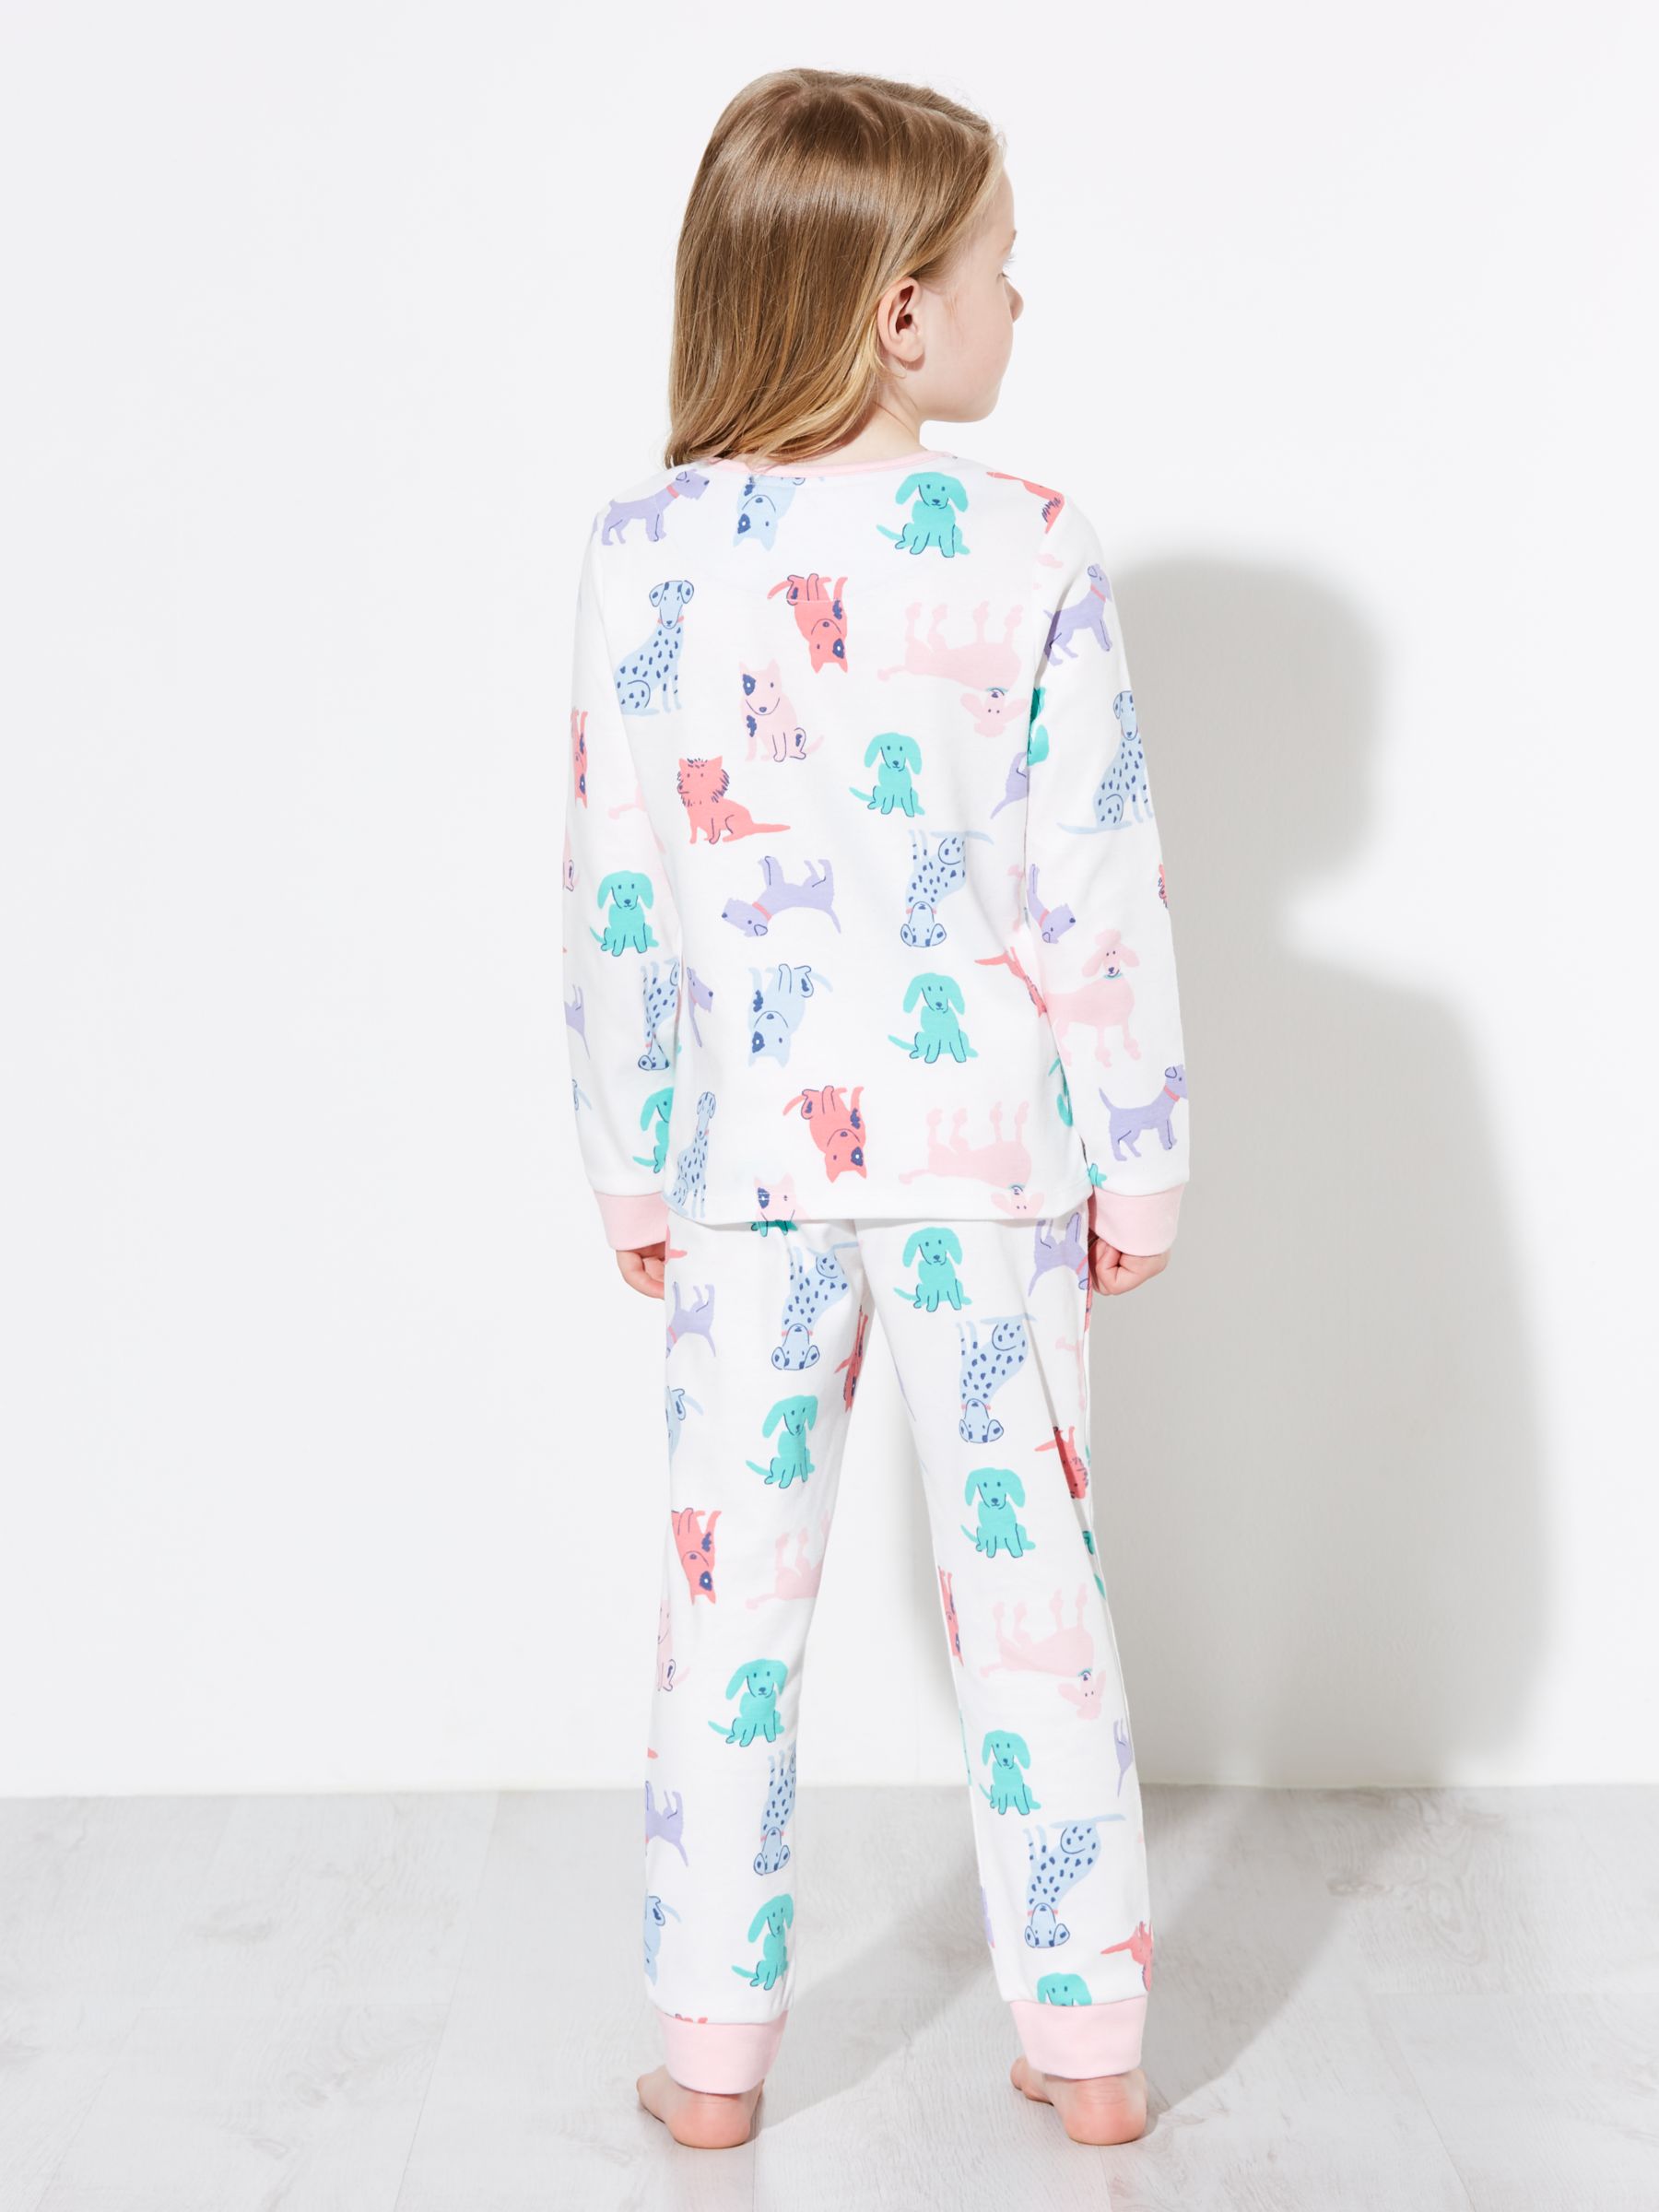 dog patterned pyjamas